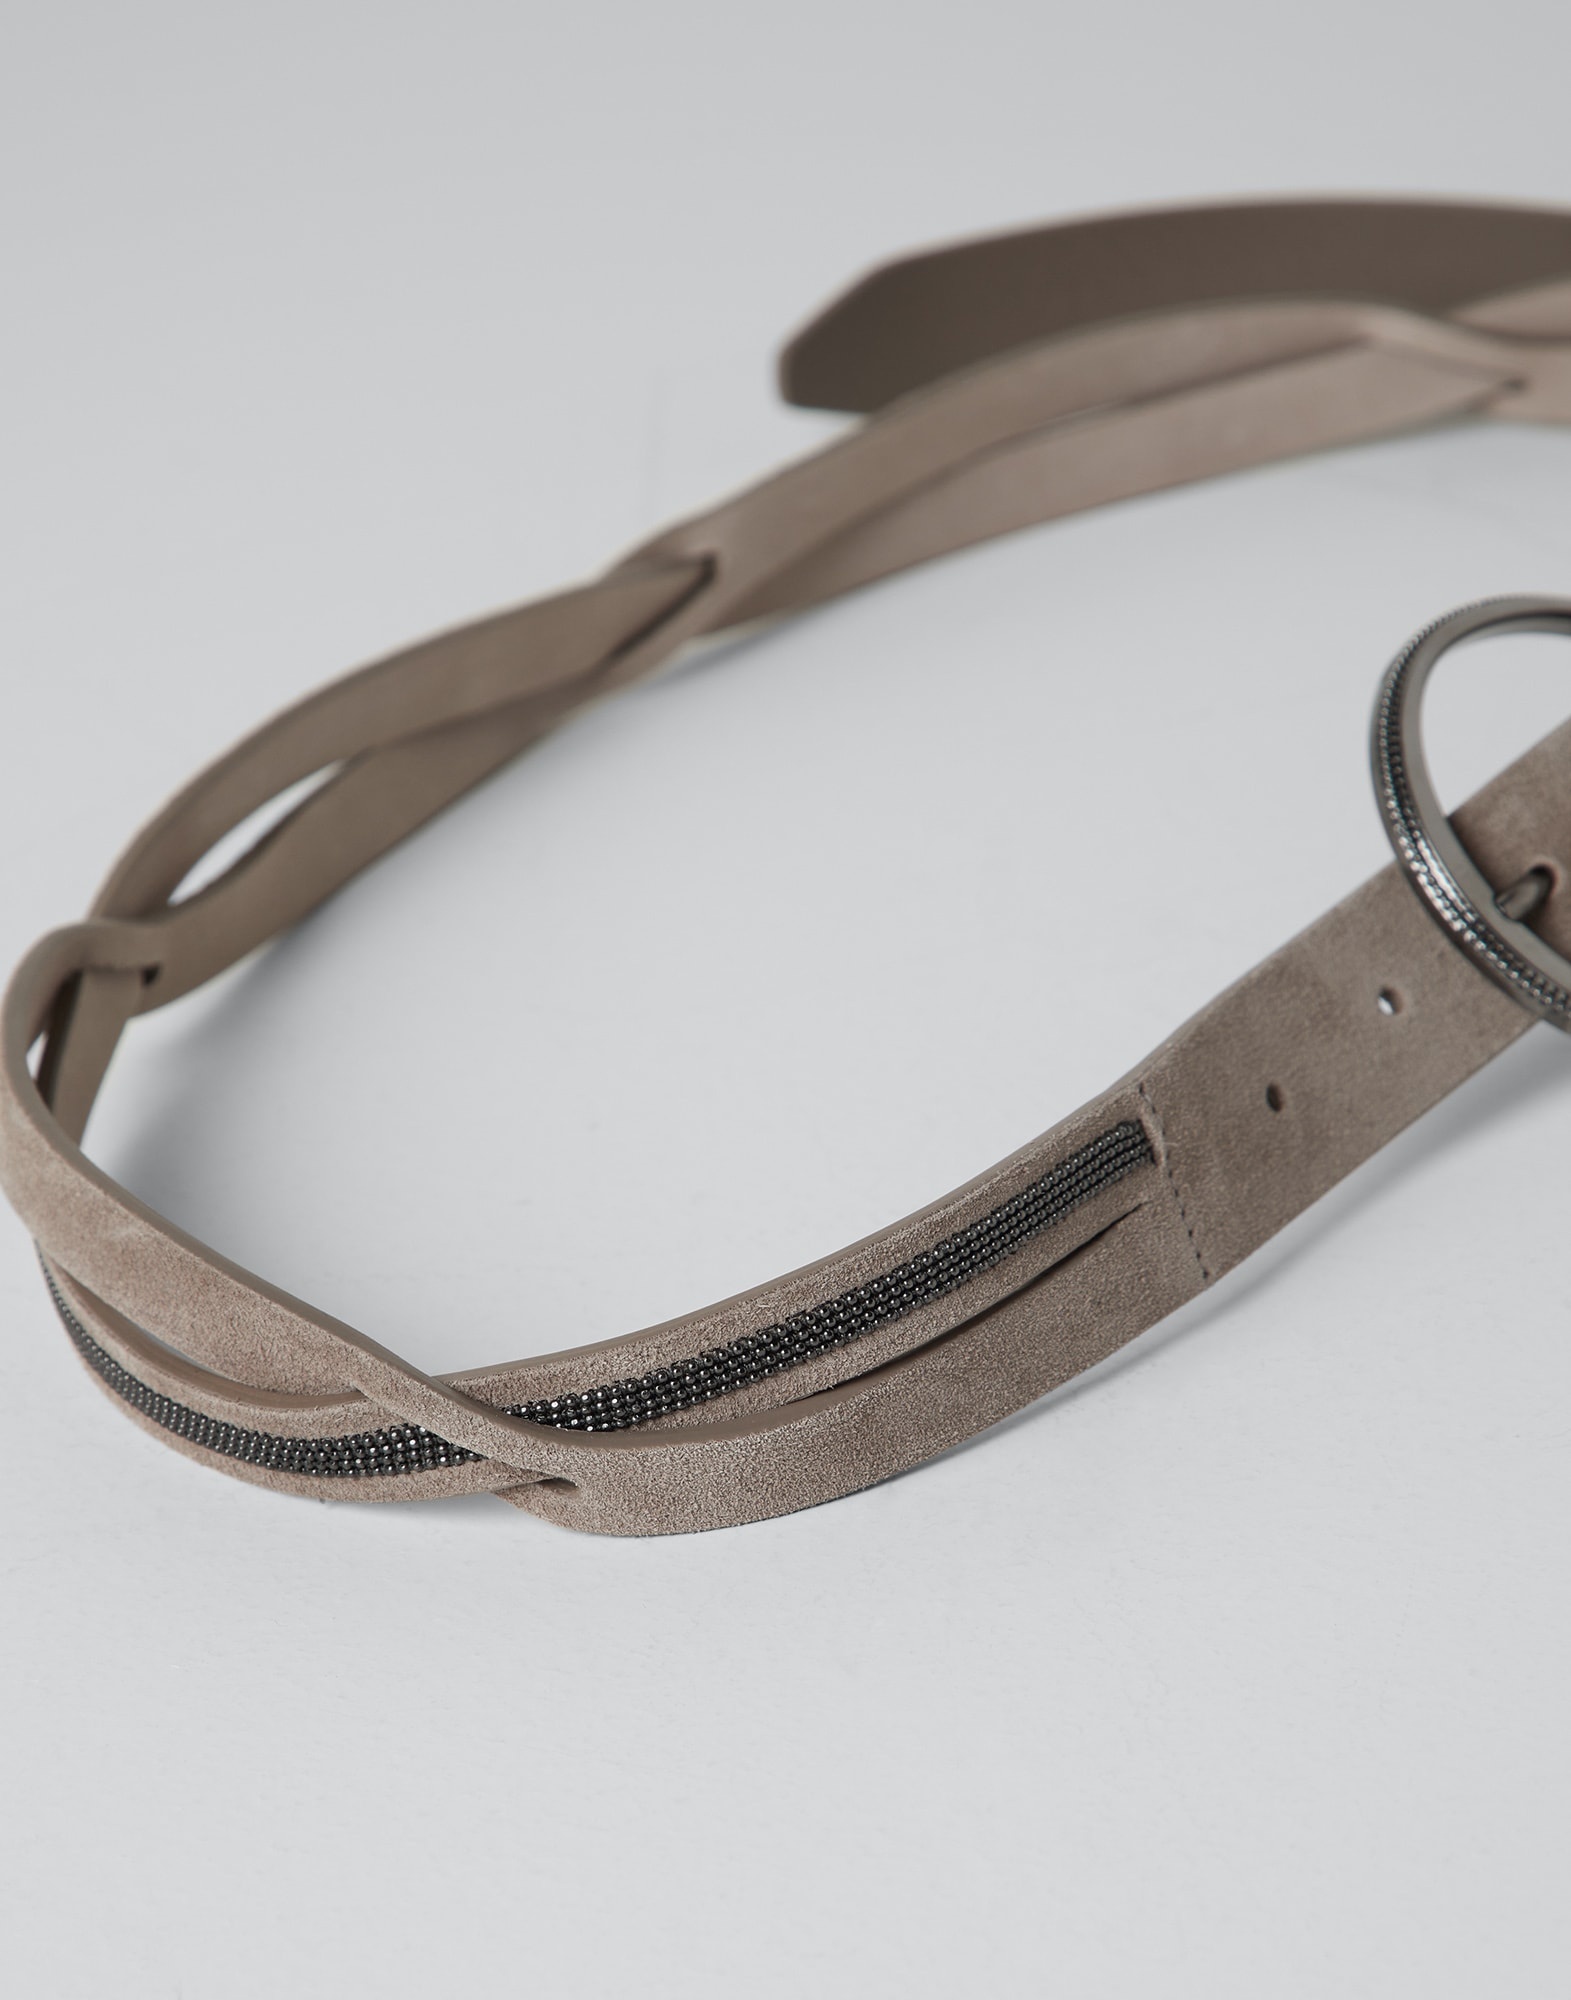 Suede calfskin shiny braid belt - 2